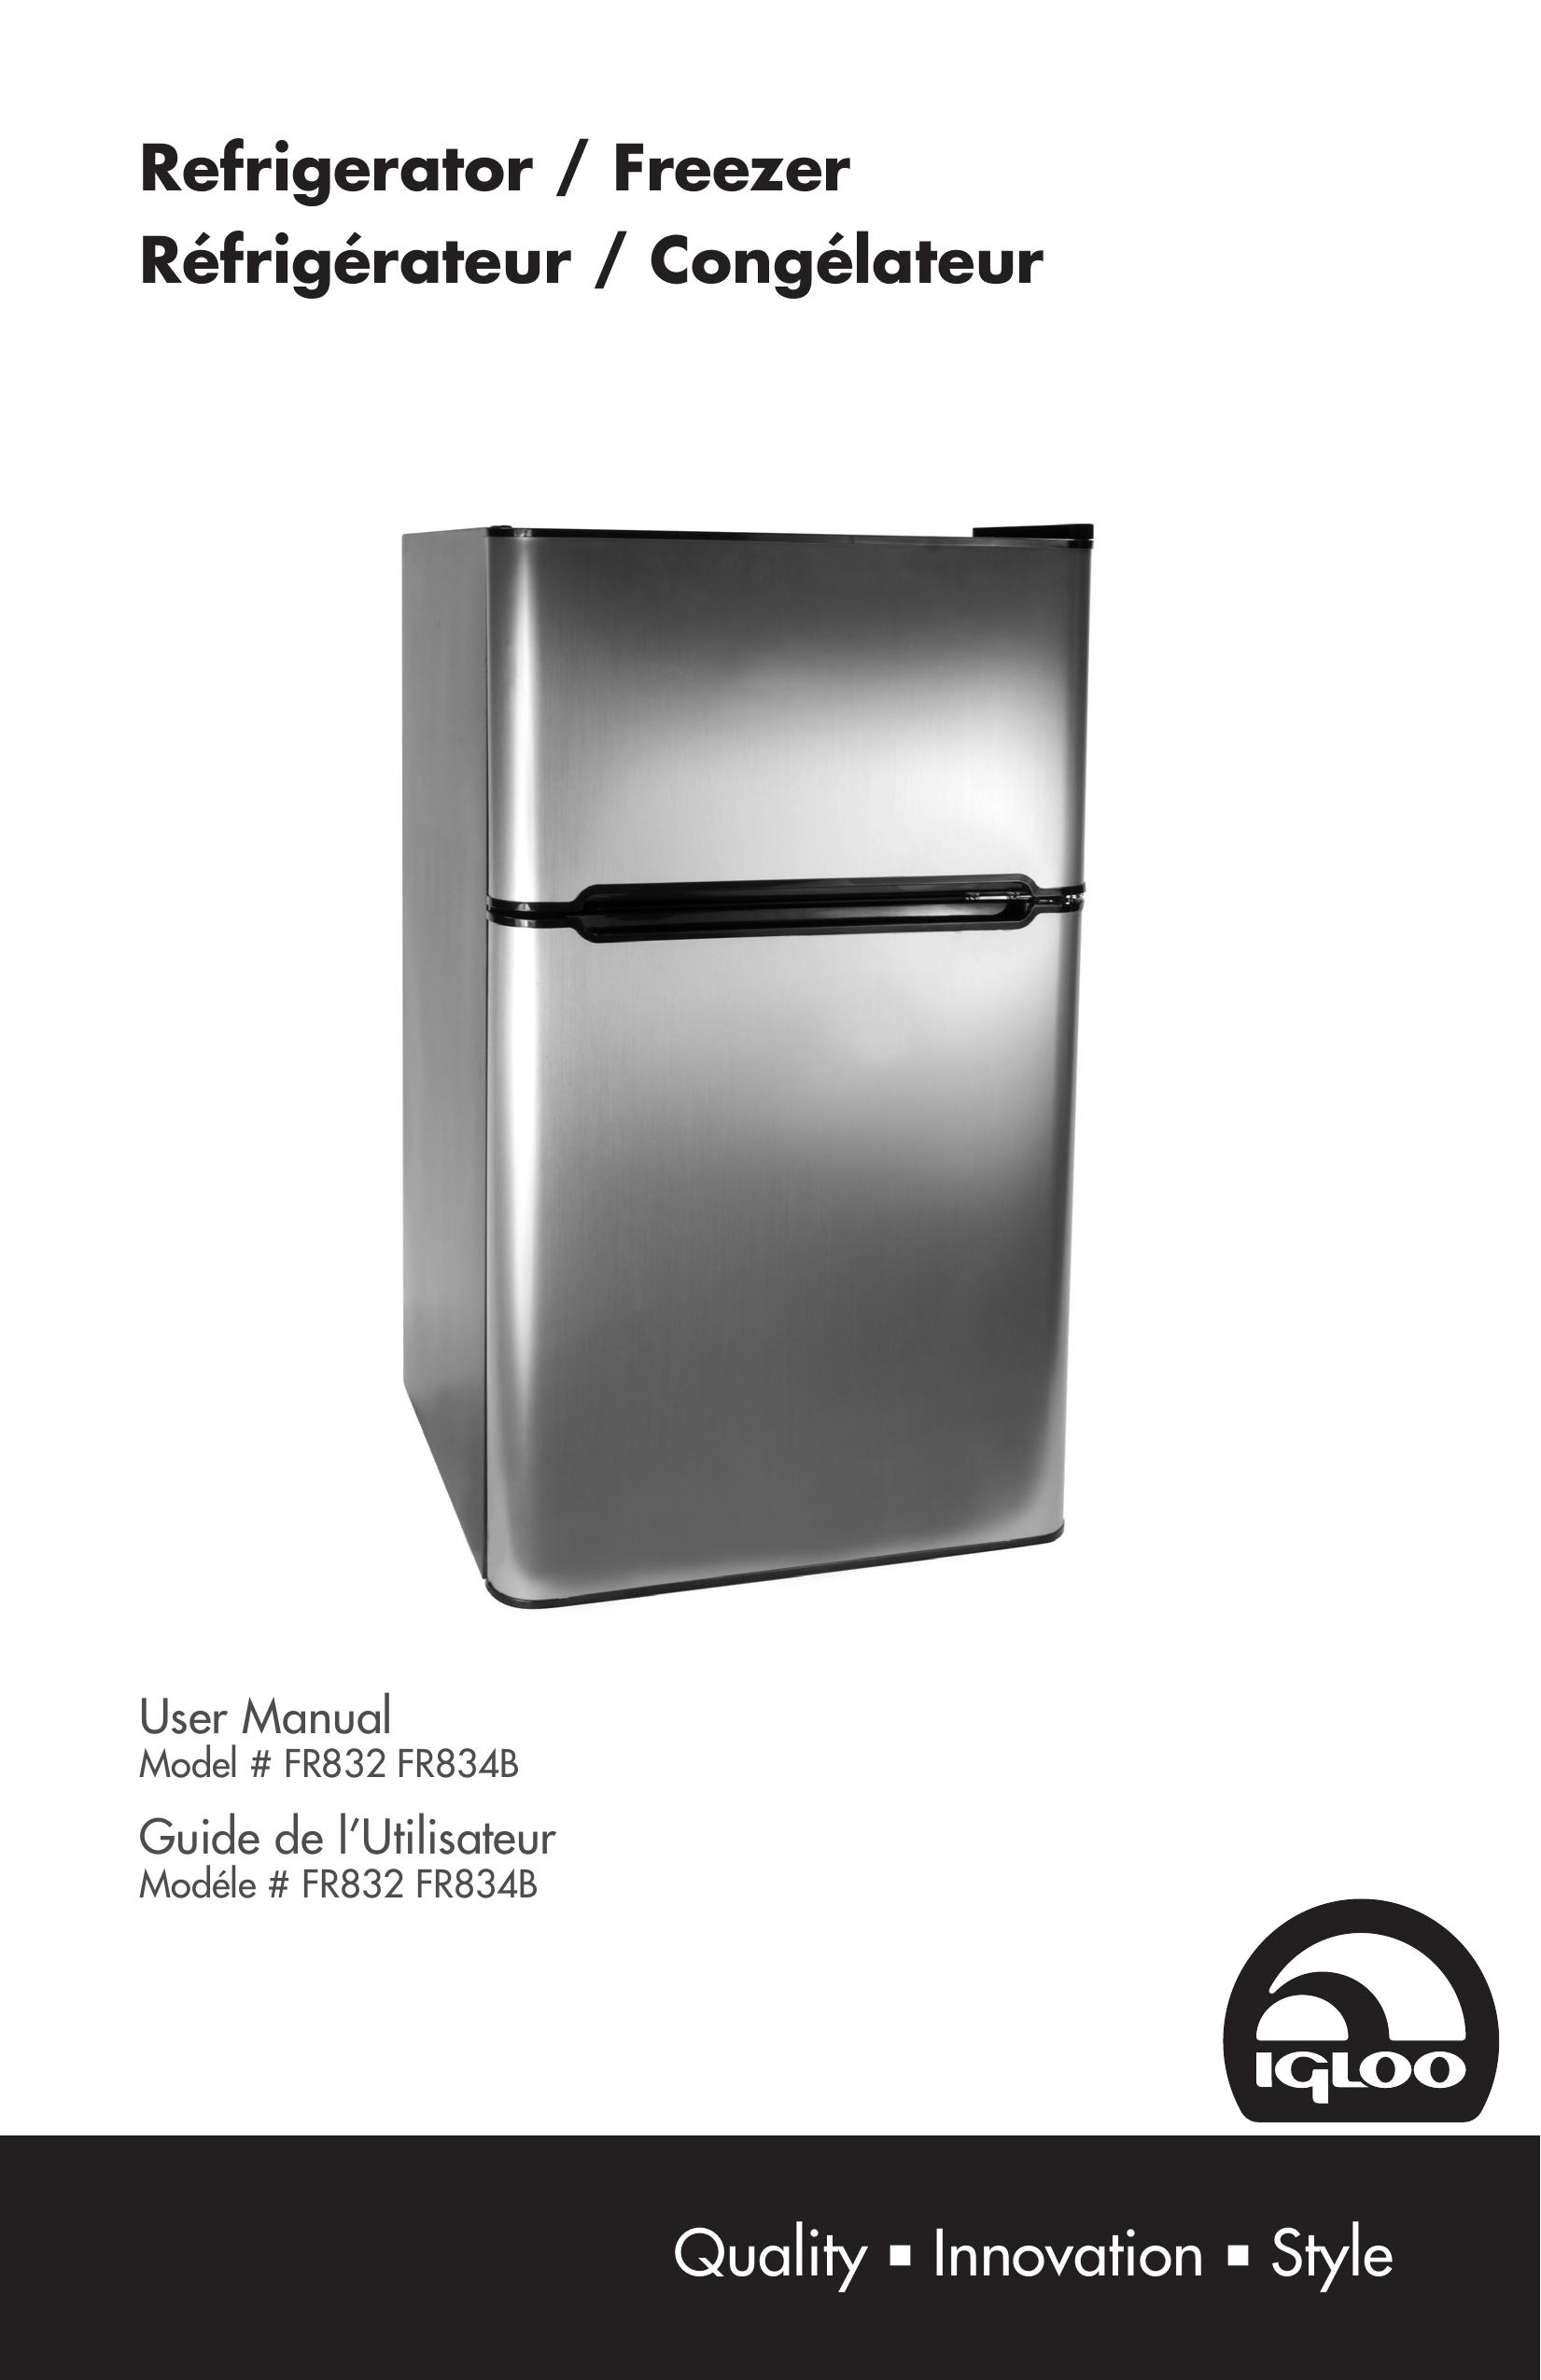 Igloo FR832 Refrigerator User Manual